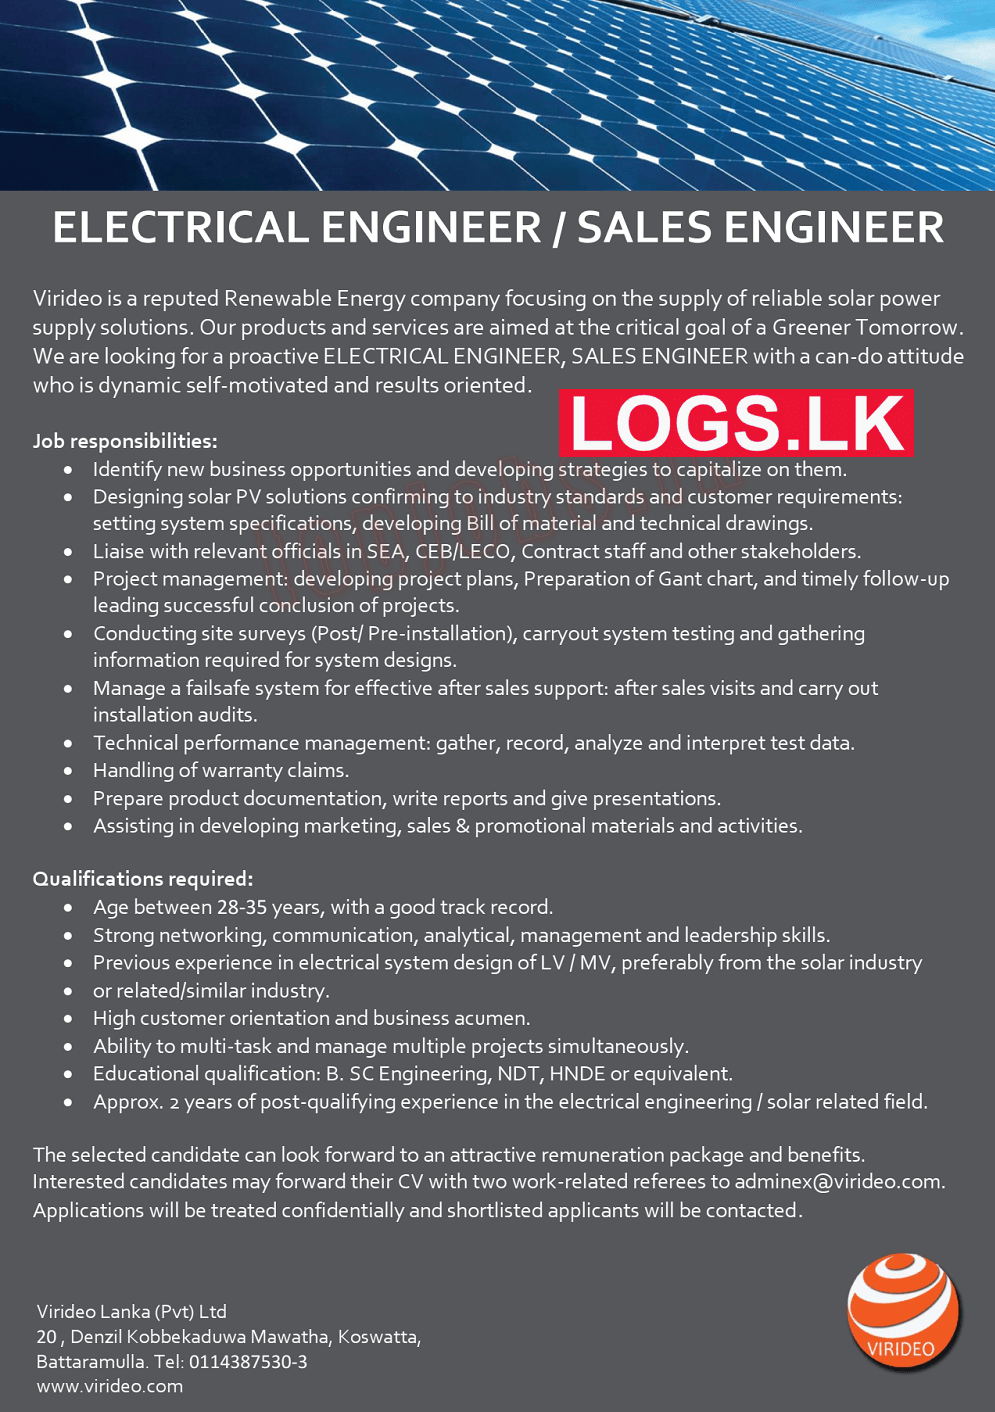 Electrical Engineer / Sales Engineer Jobs at Virideo Lanka (Pvt) Ltd Application, Details Download